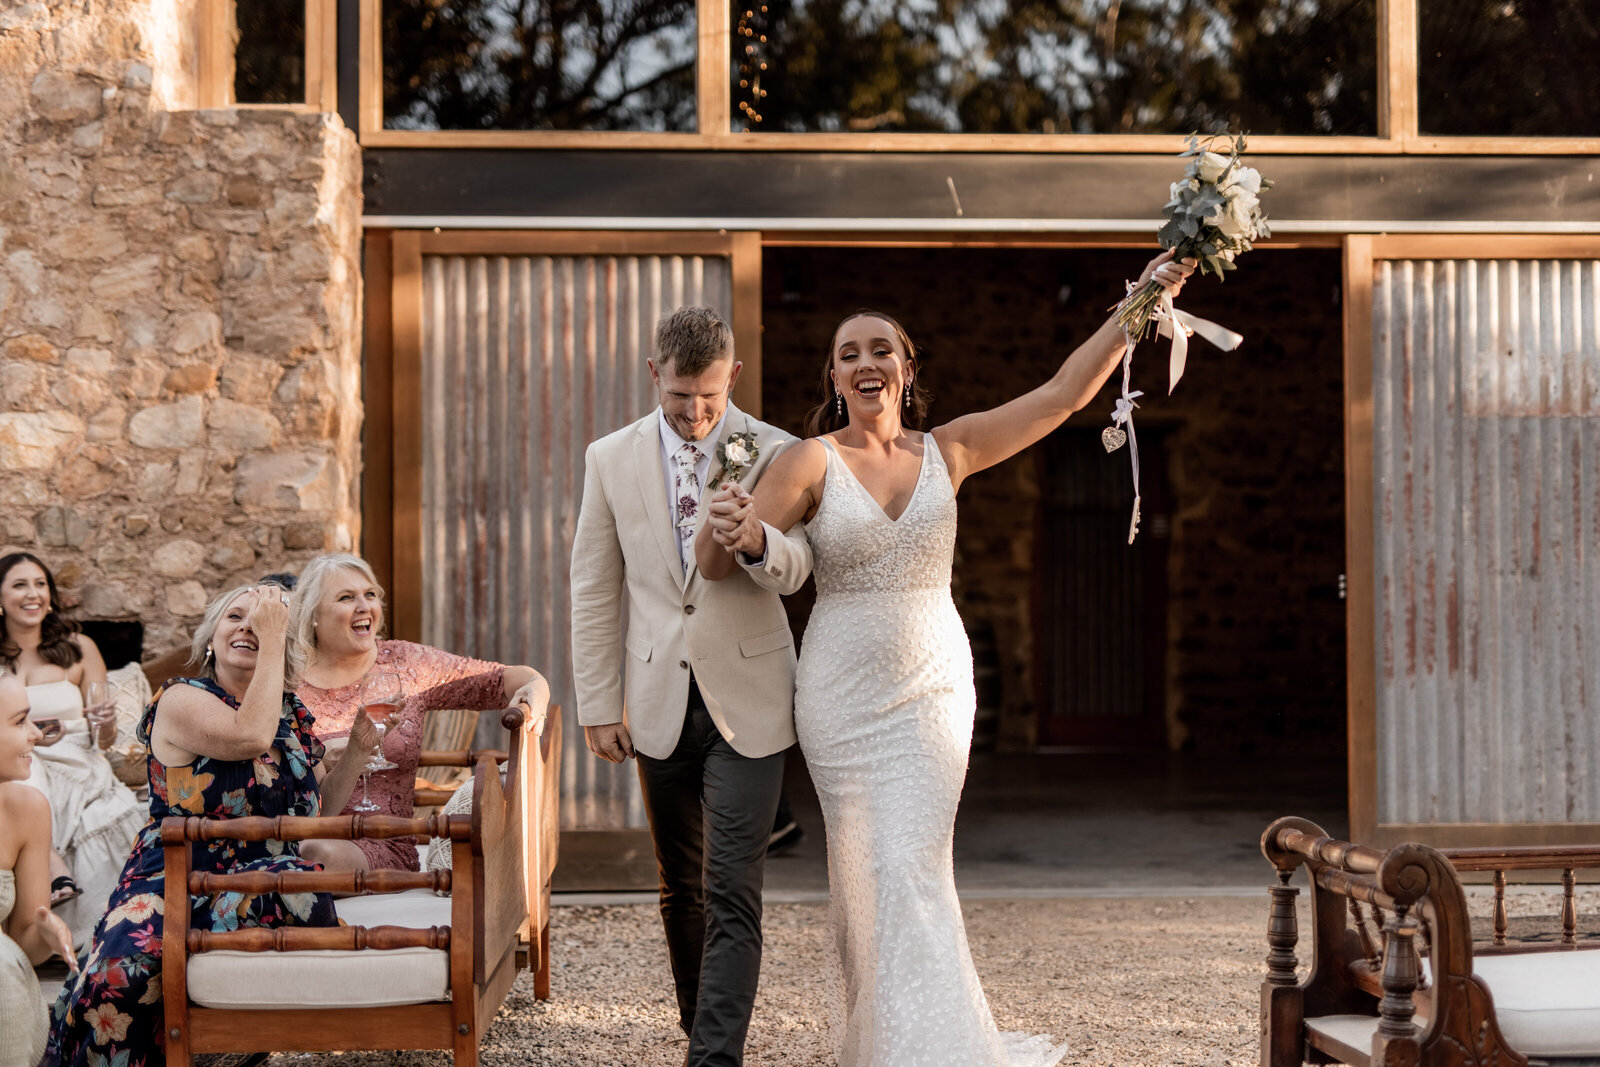 Caitlin-Reece-Rexvil-Photography-Adelaide-Wedding-Photographer-517